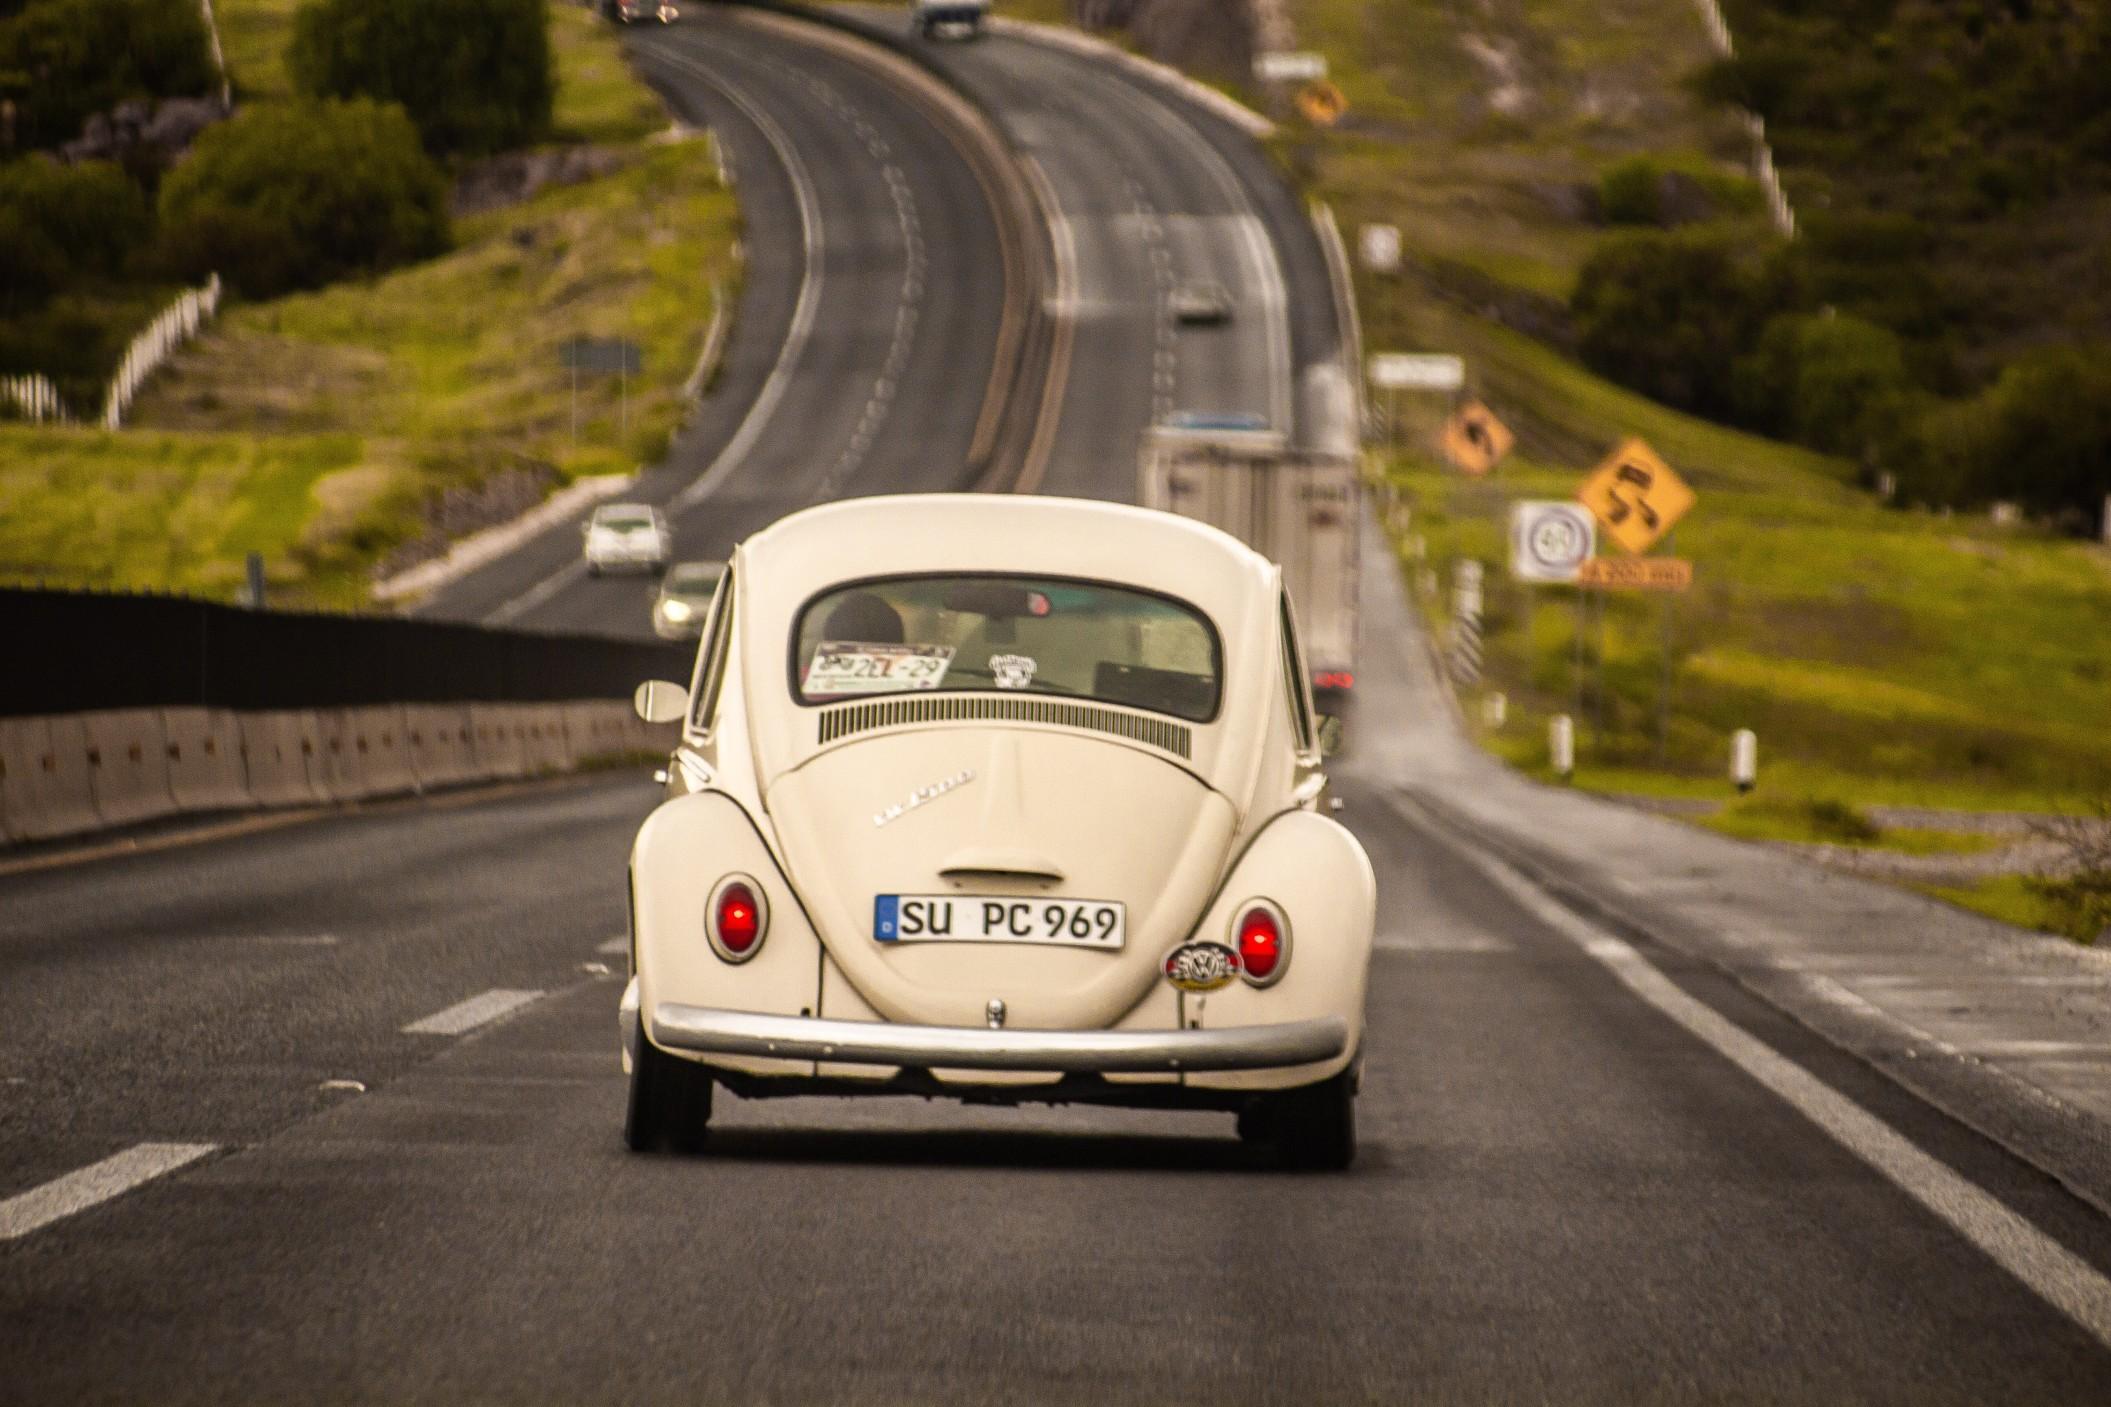 The horrific serial killer drove around an unassuming VW Beetle.